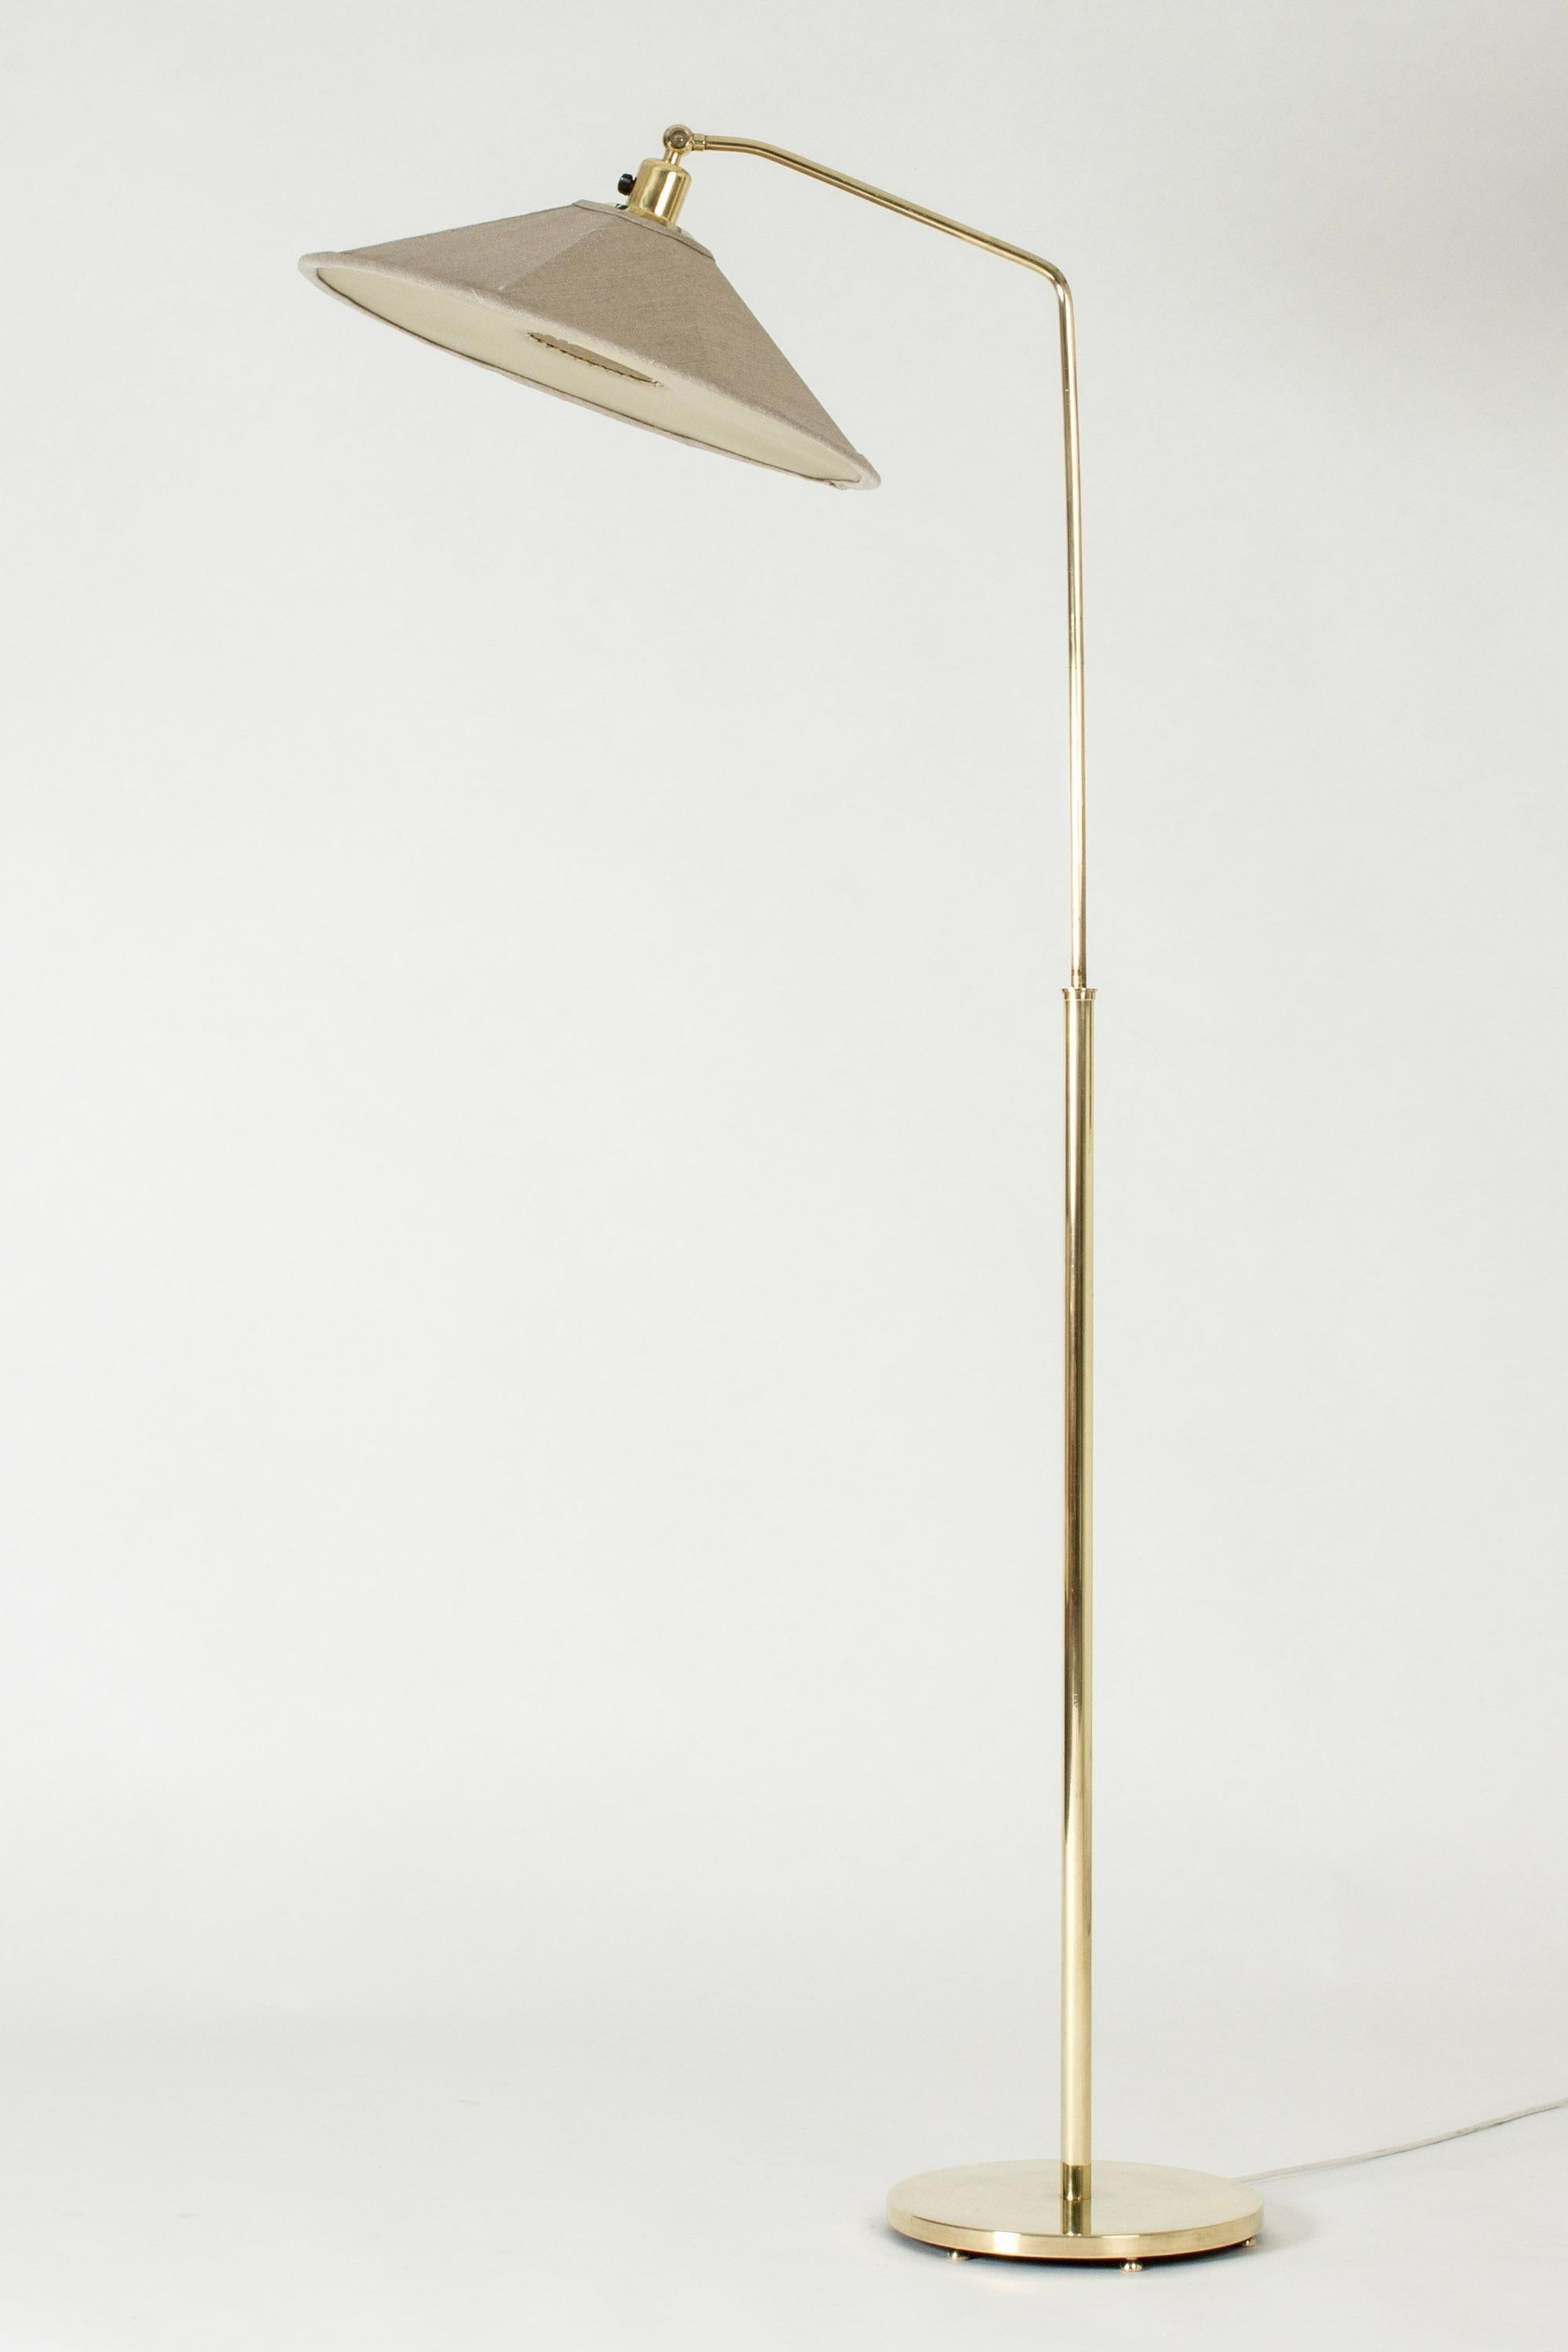 Scandinavian Modern Mid-Century Modern Brass Floor Lamp from Böhlmarks, Sweden, 1940s For Sale